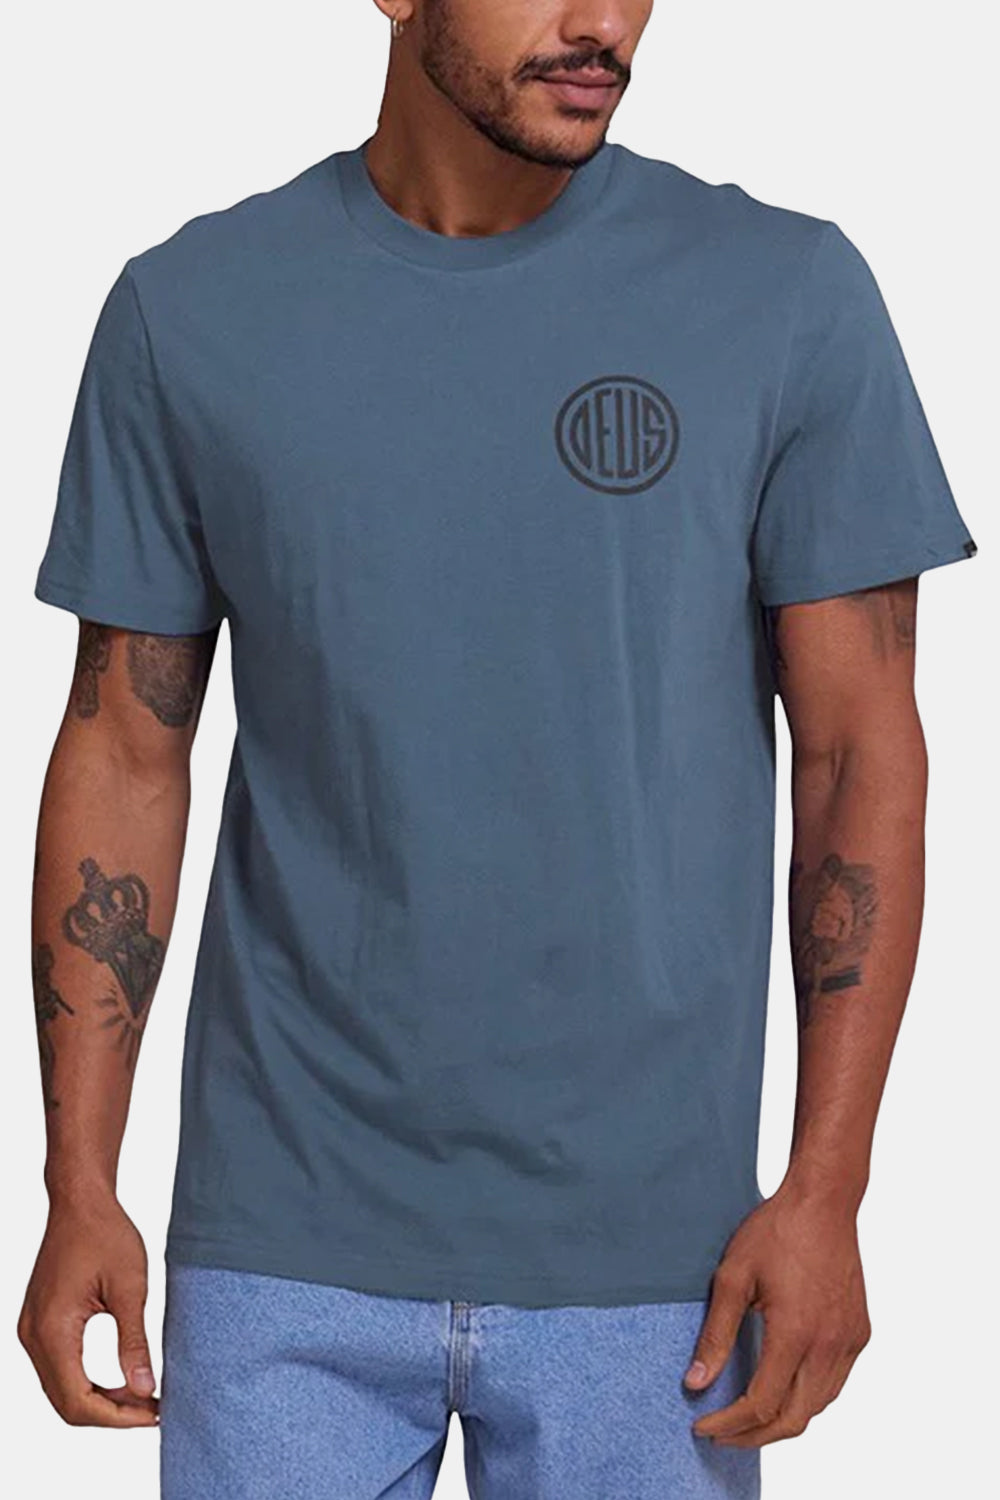 Deus Clutch T-shirt (Smokey Blue)